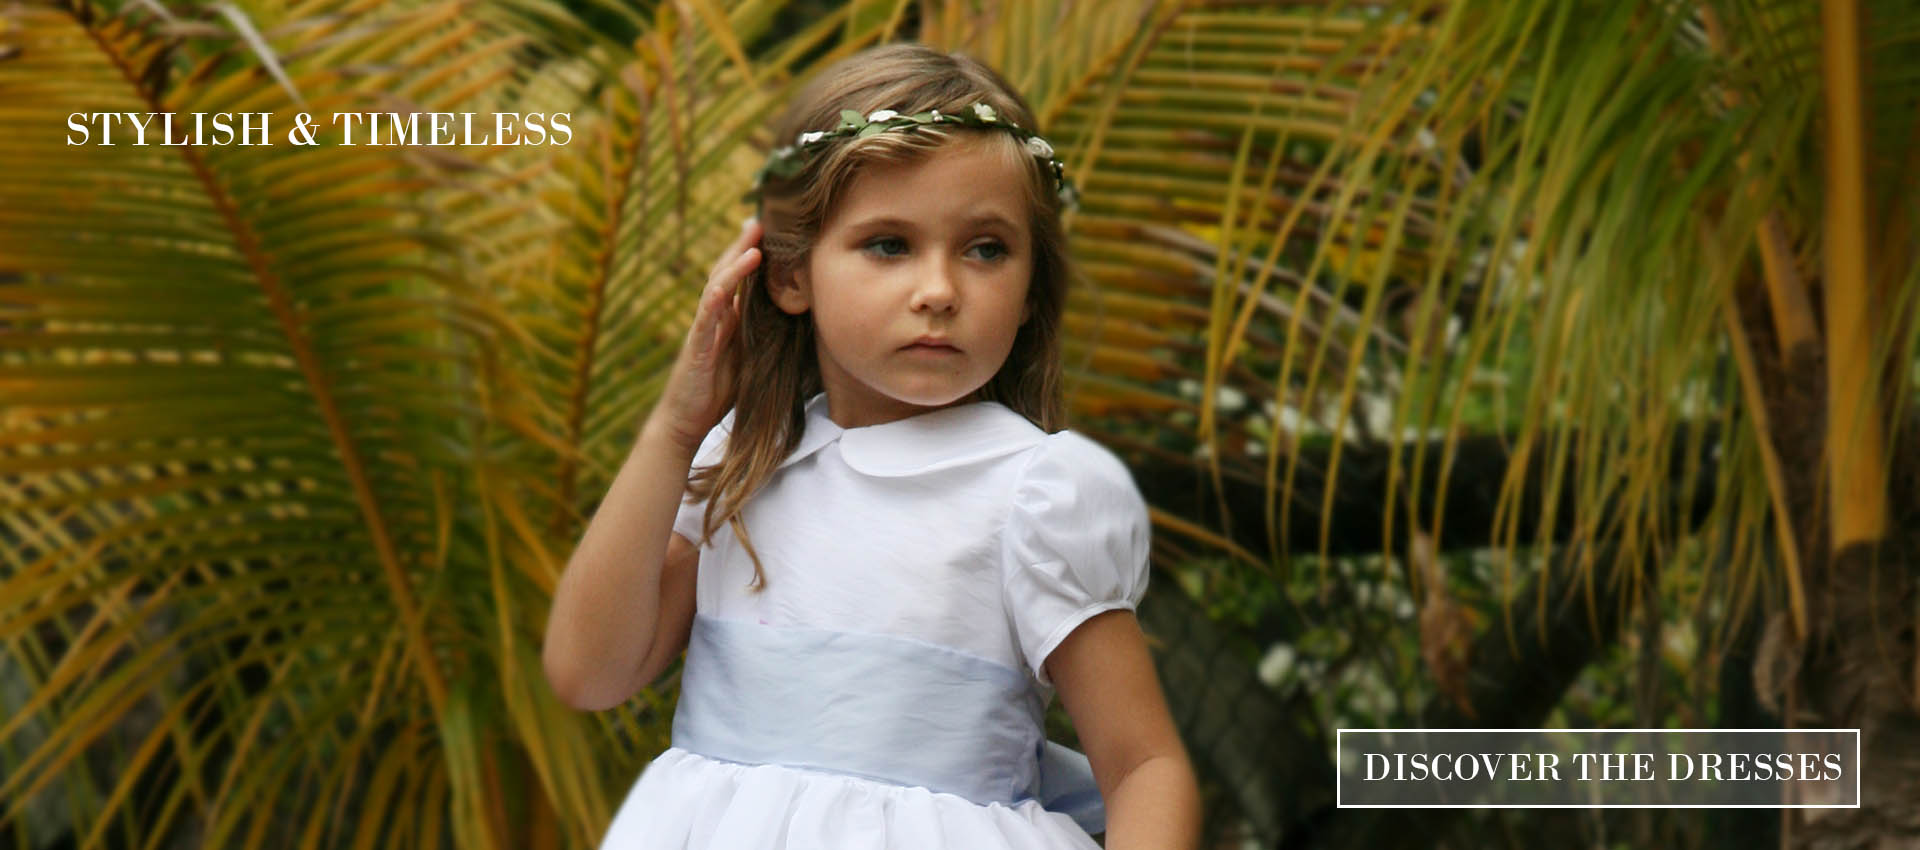 Luxury flower girl dresses and communion dresses by French Royal designer Little Eglantine